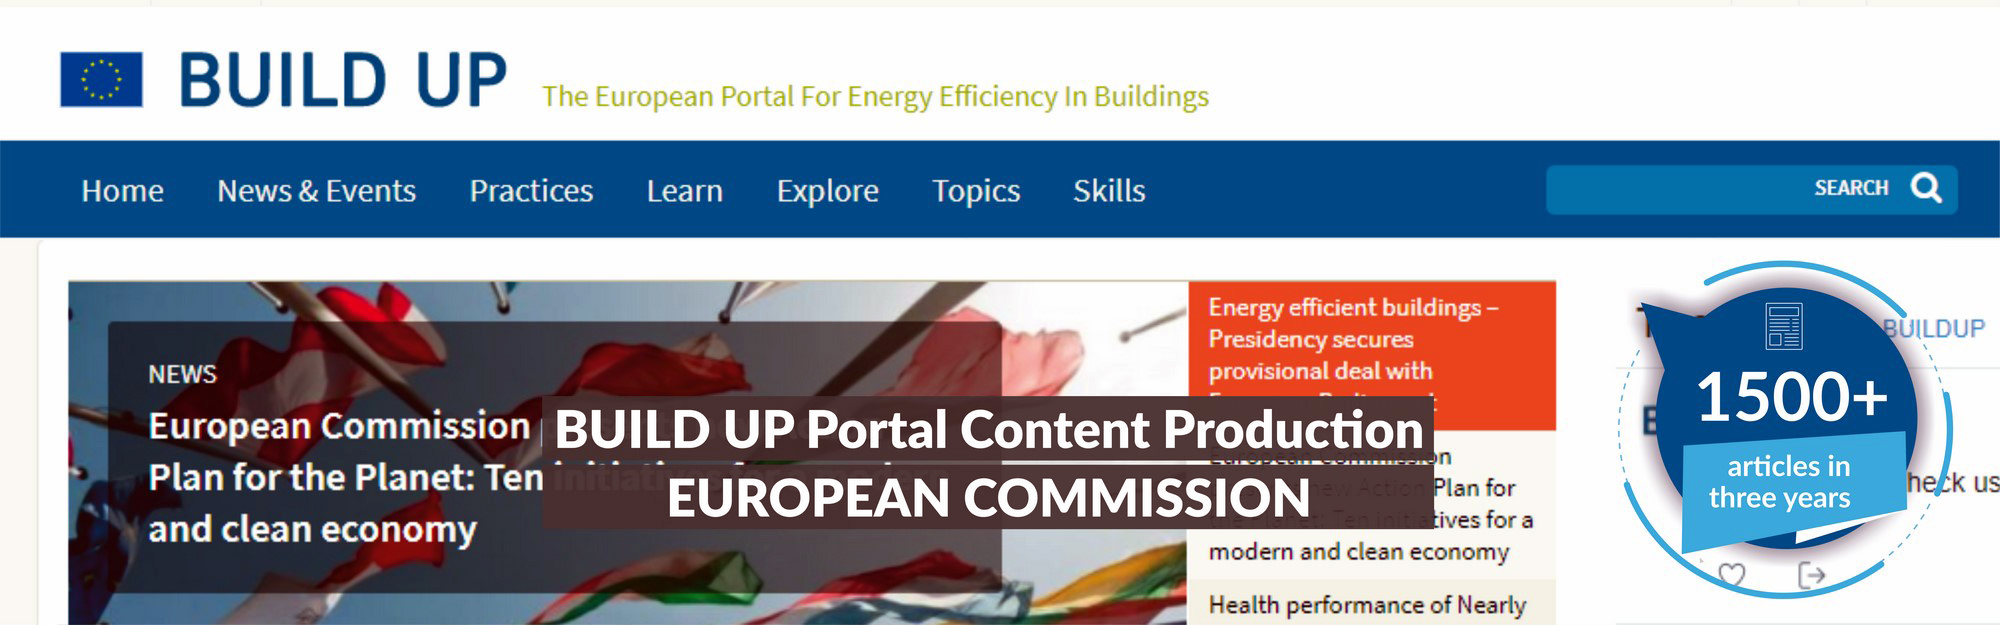 BUILD UP: THE EUROPEAN PORTAL FOR ENERGY EFFICIENCY IN BUILDINGS